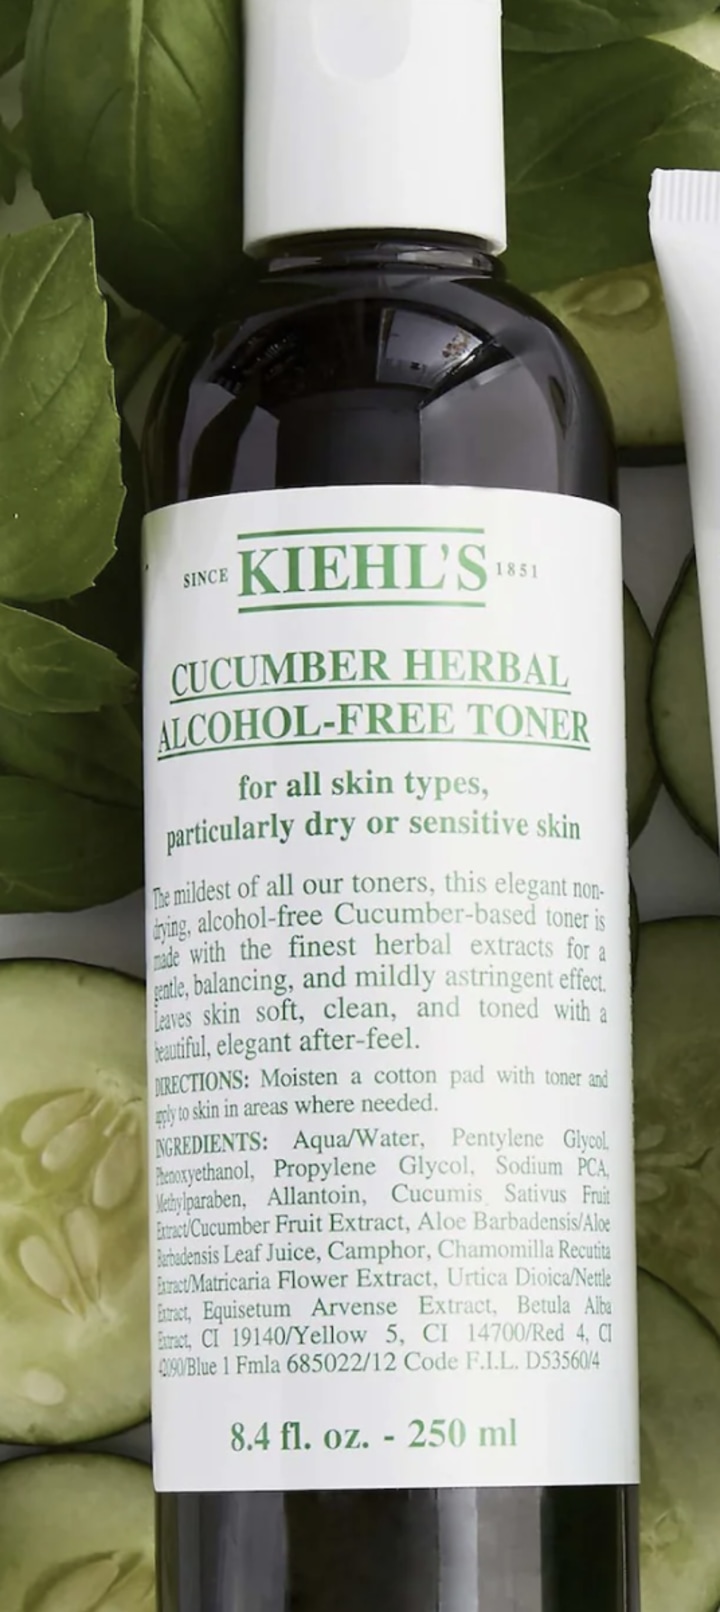 Kiehl’s Cucumber Herbal Alcohol-Free Toner